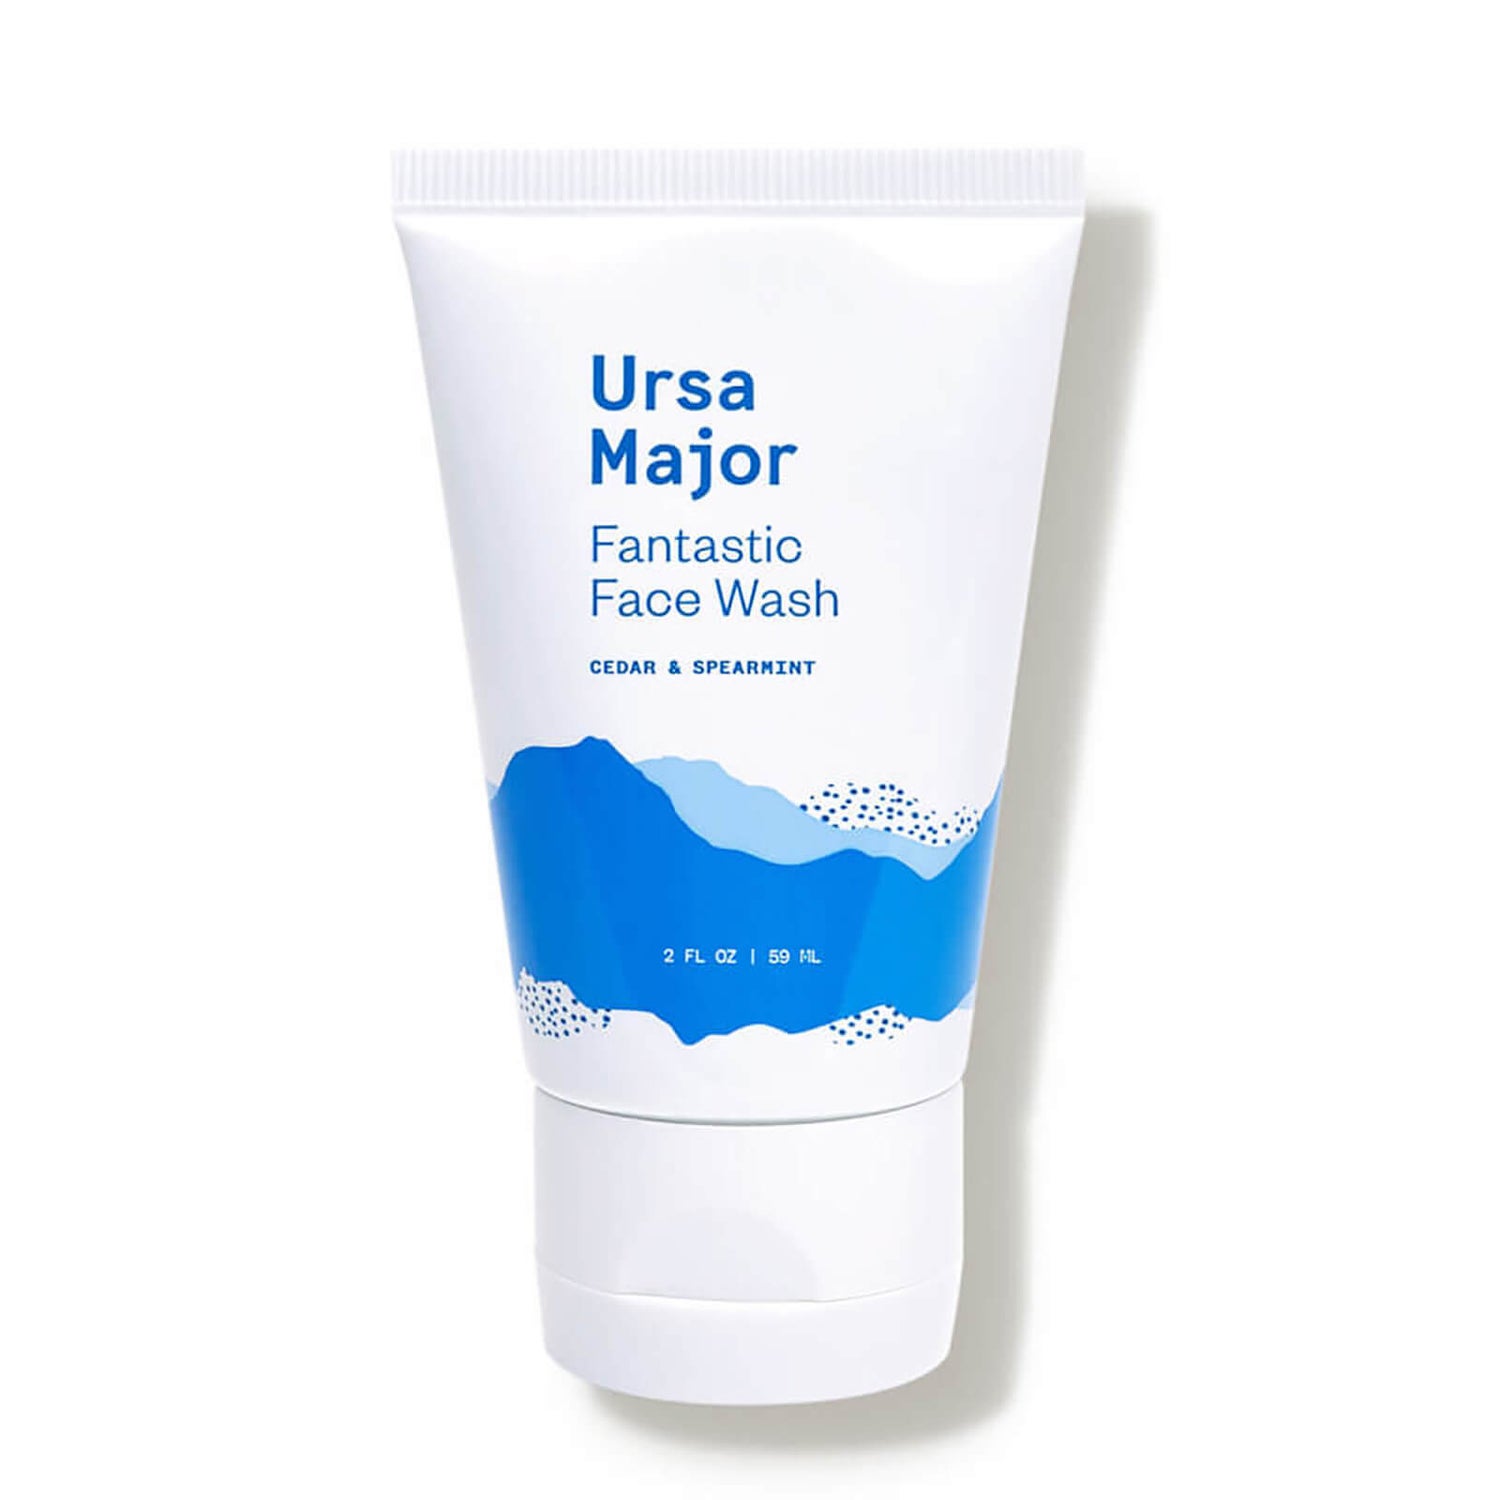 Ursa Major Fantastic Face Wash (2 fl. oz.)